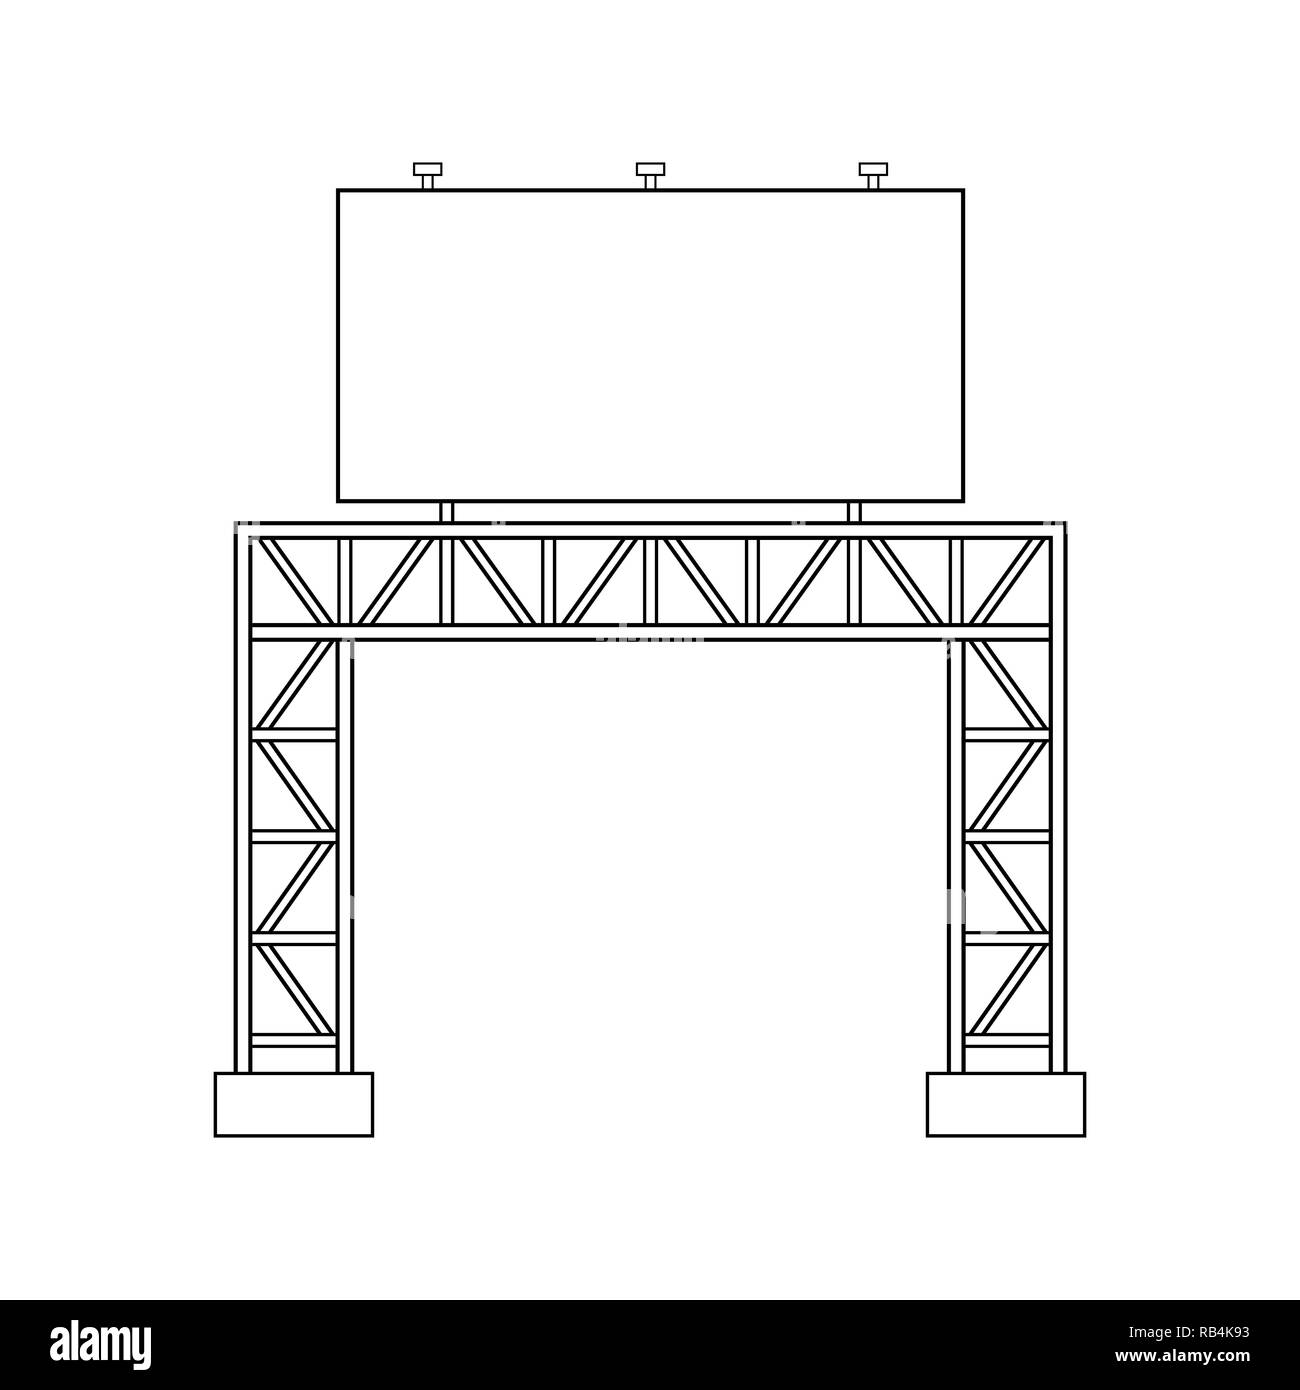 Esquema abstracto, space frame estructura de vallas publicitarias  ilustración vectorial Imagen Vector de stock - Alamy